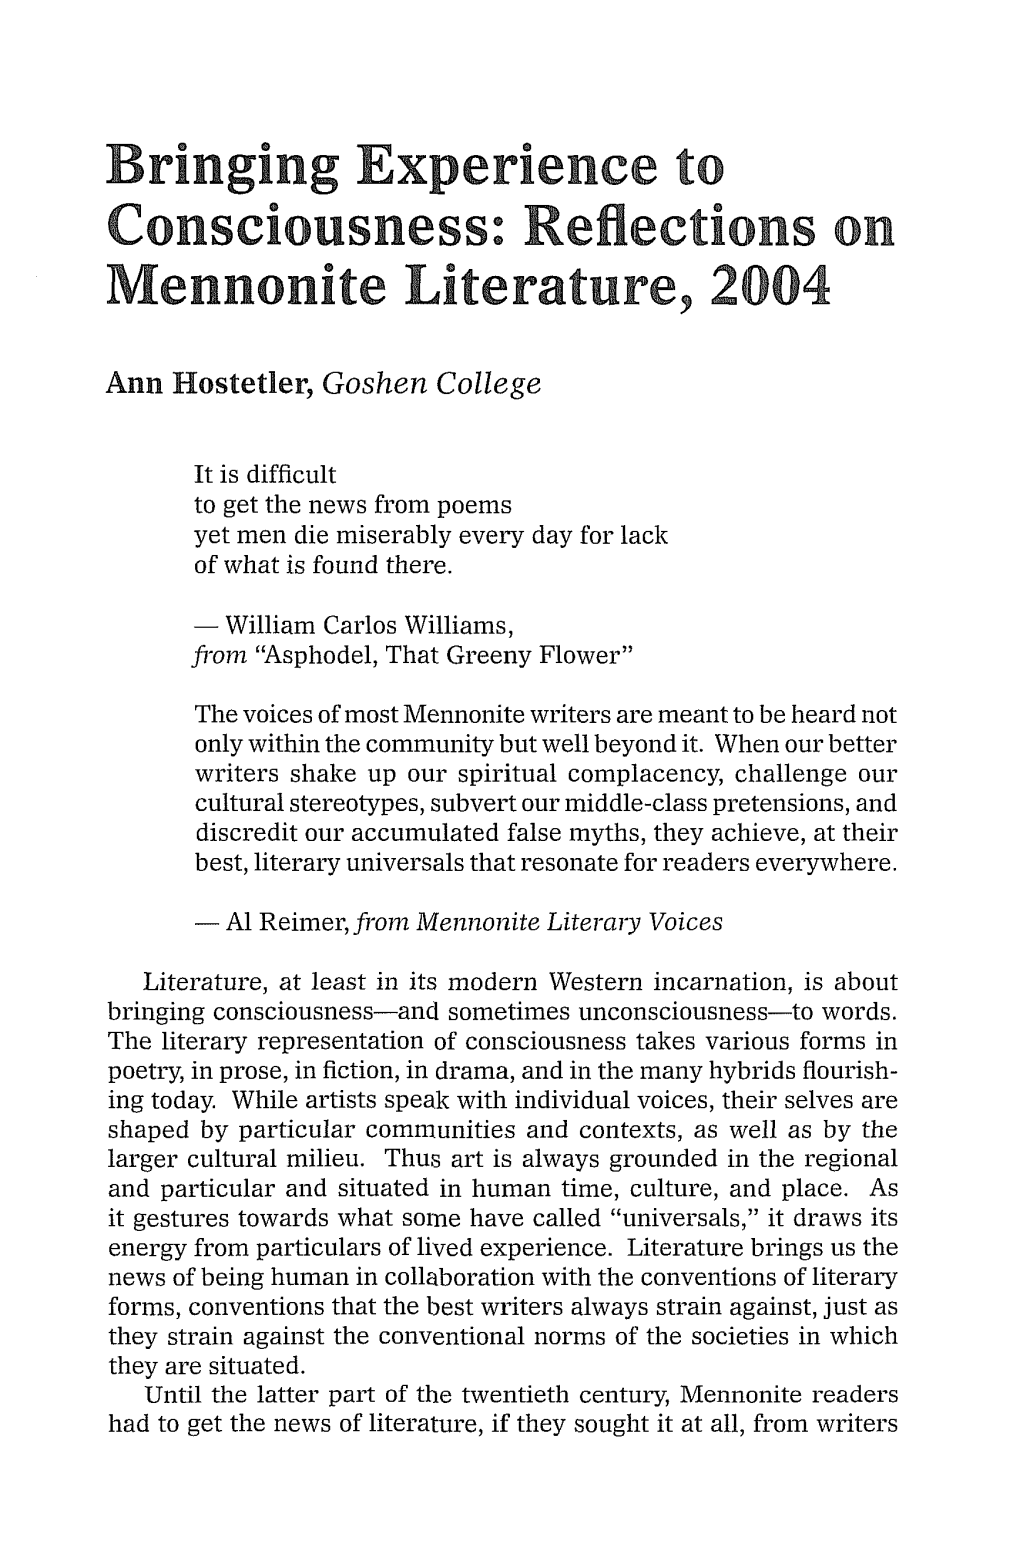 Reflections on Mennonite Literature, 2004